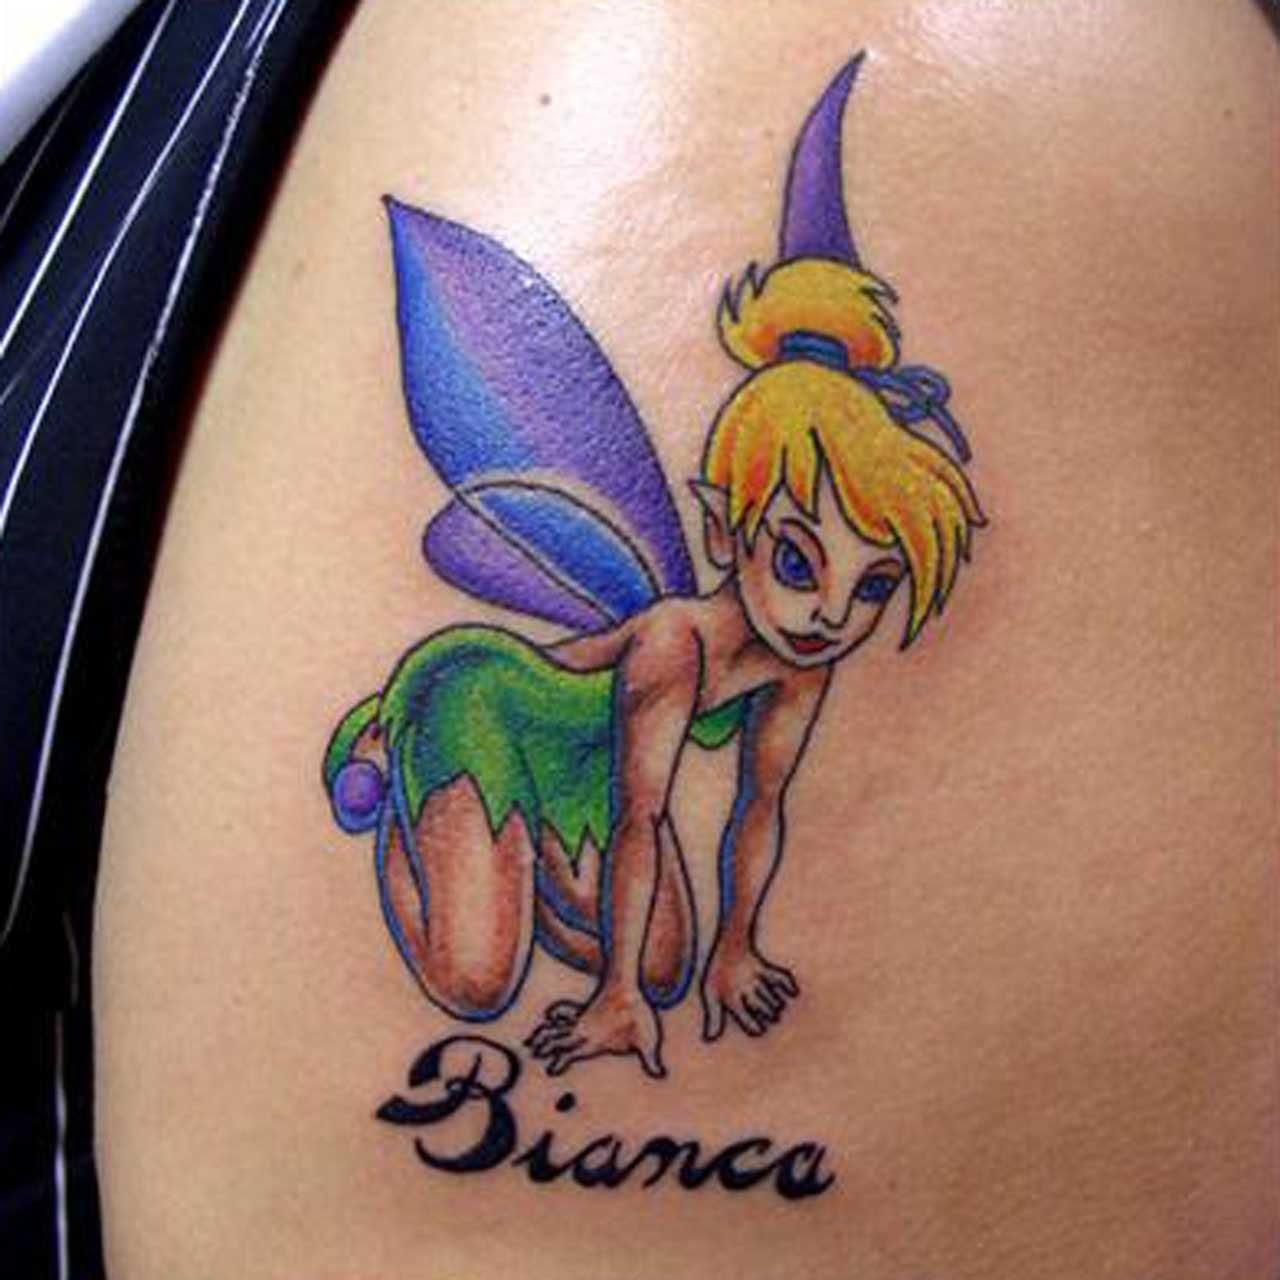 Bianca - Colorful Tinkerbell Tattoo Design For Shoulder